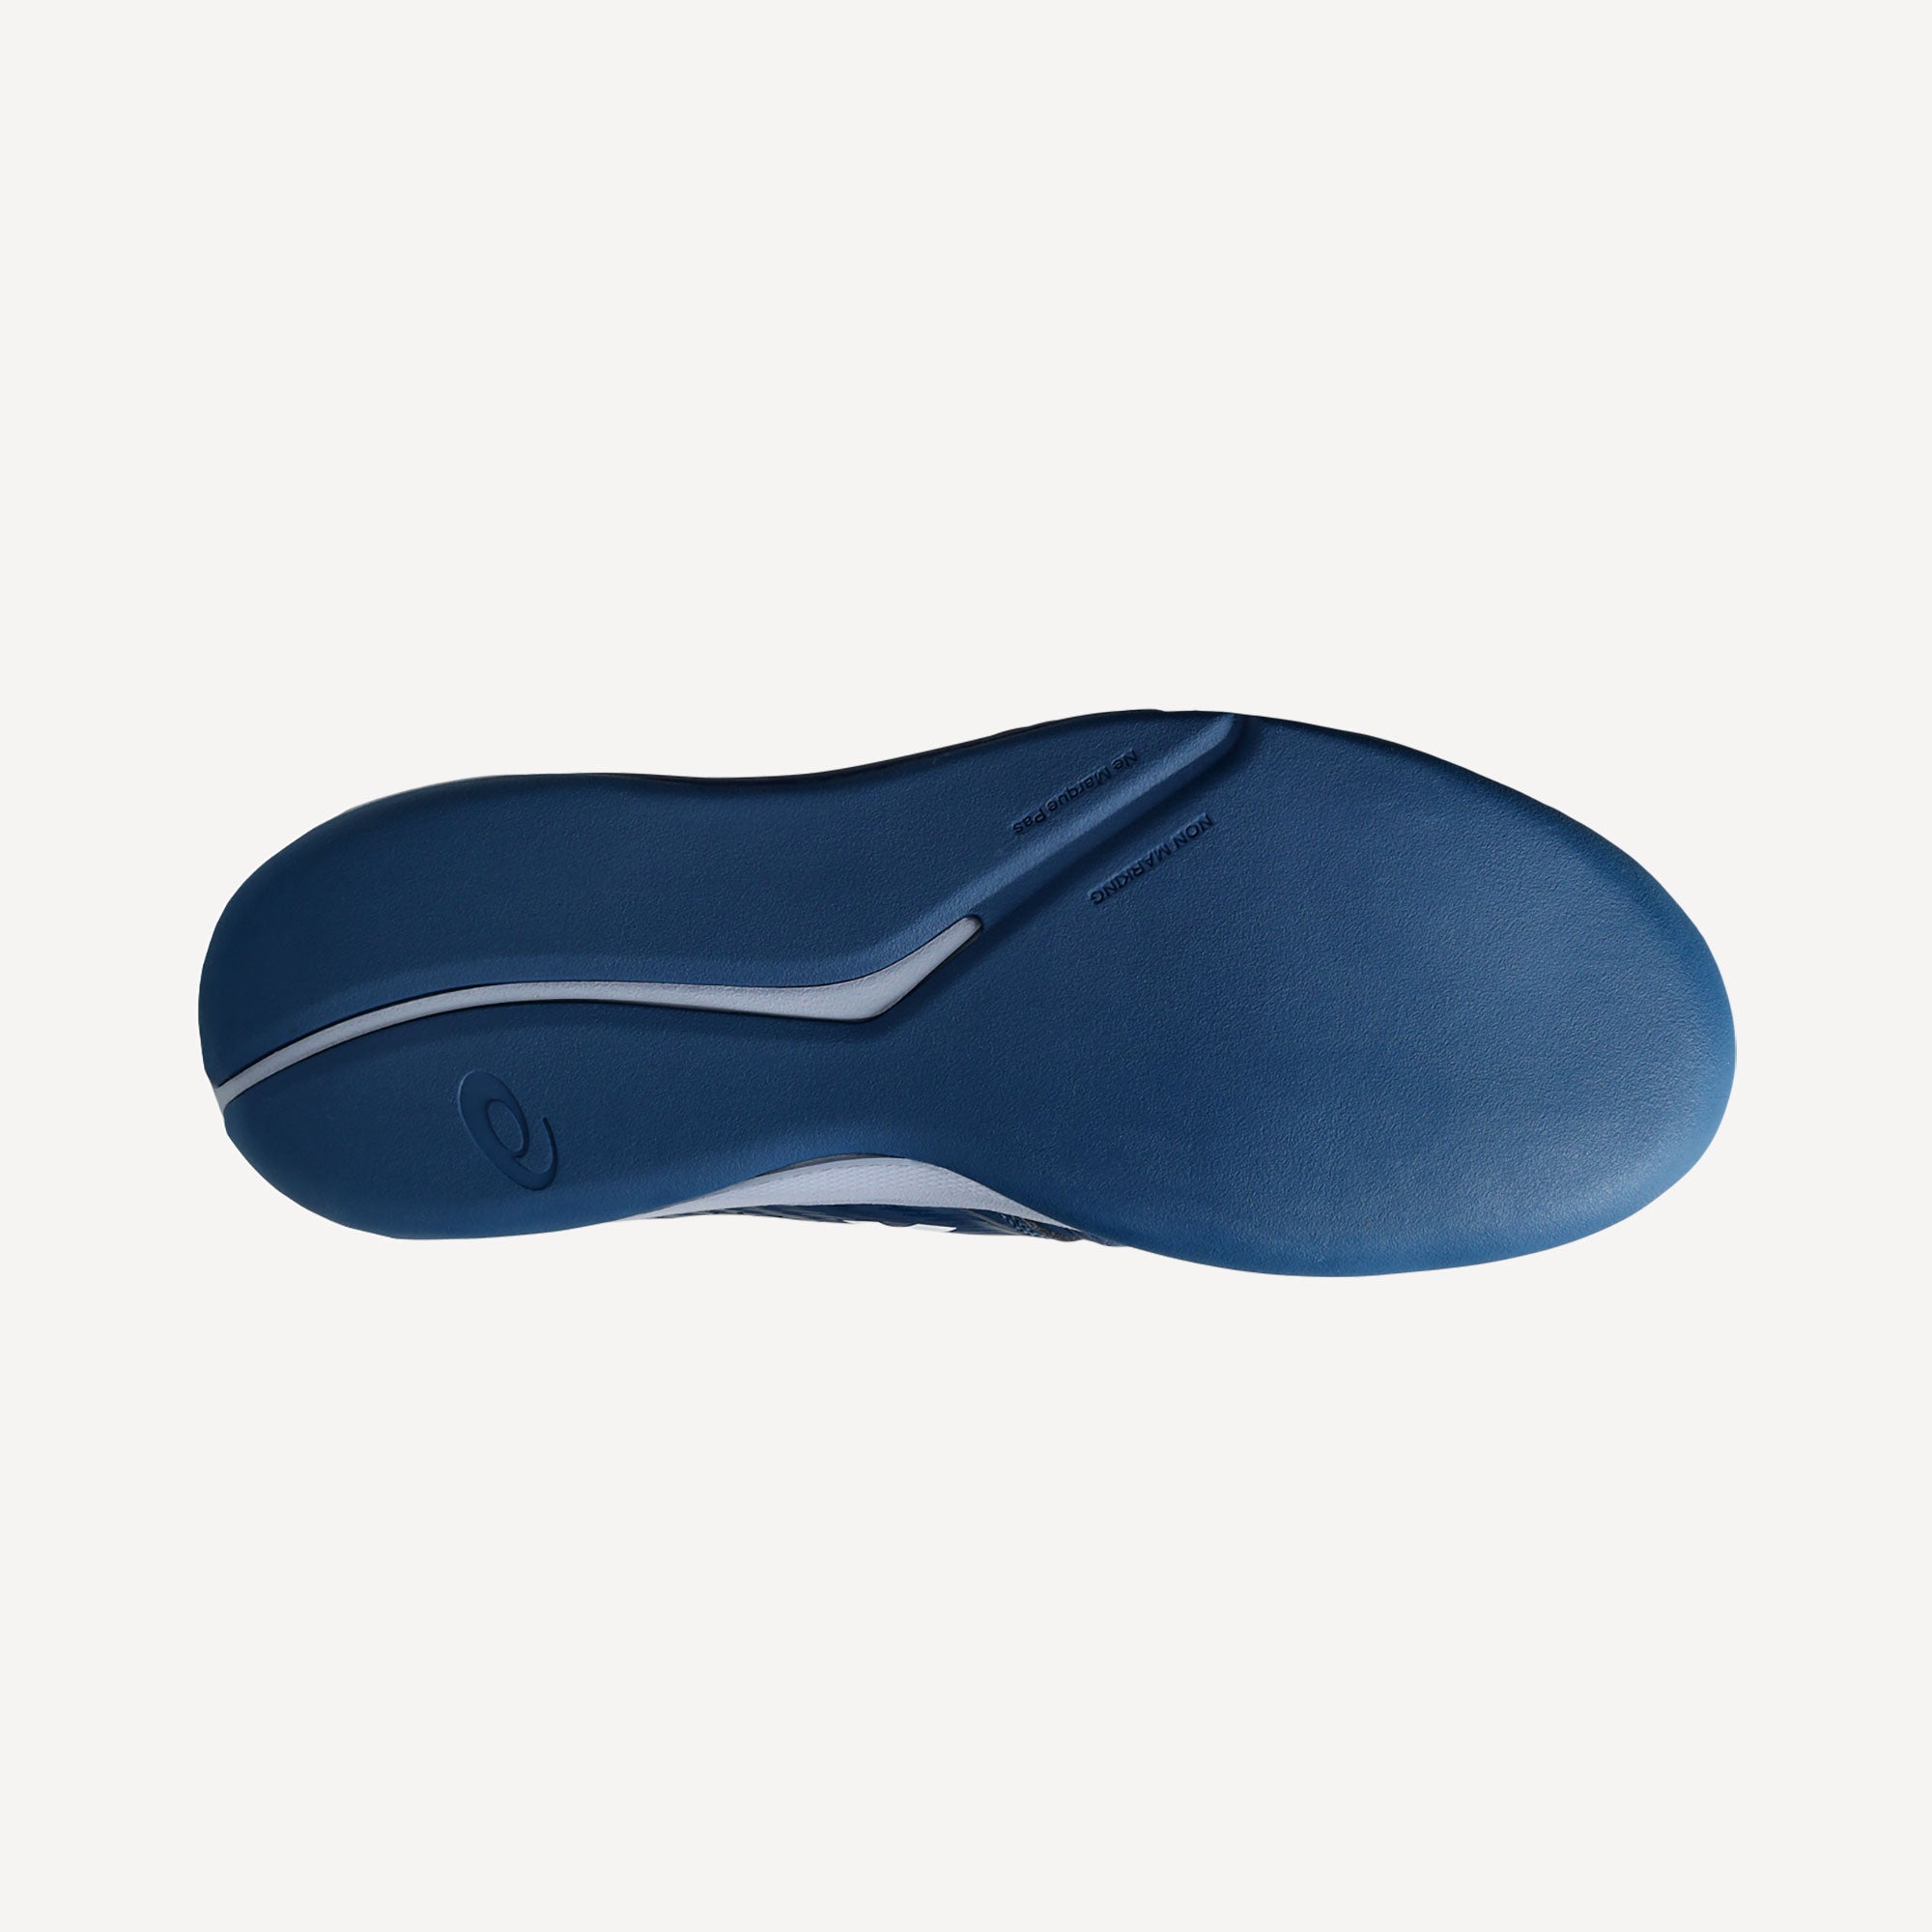 ASICS Gel-Challenger 14 Men's Carpet Tennis Shoes - Blue (2)